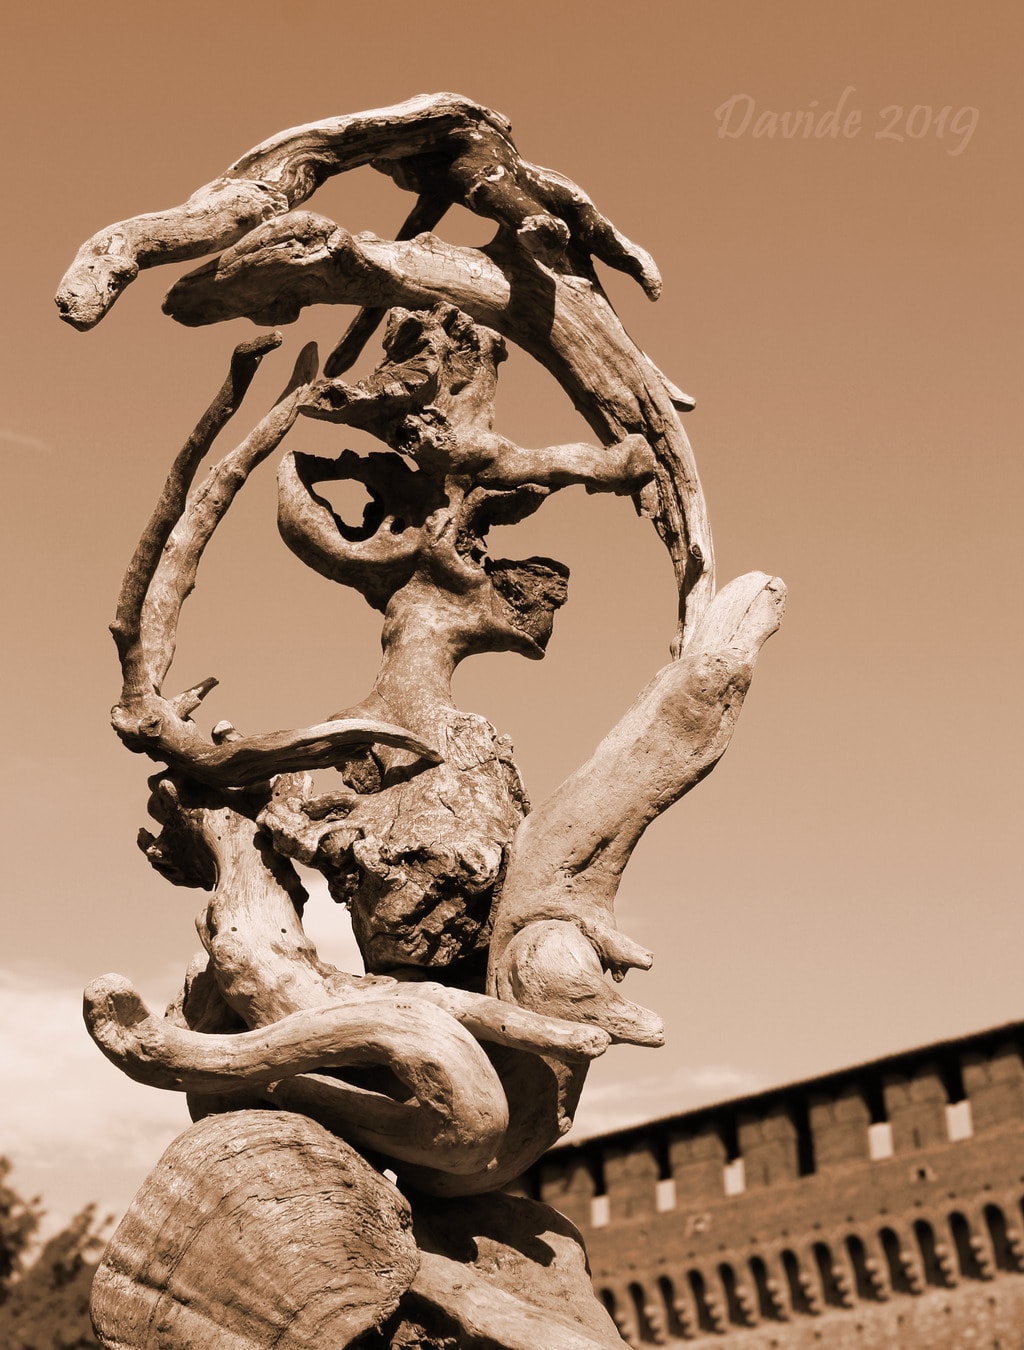 Давиде Тансини, “Неуловимые формы #36 – Замок Сфорца” [“Forme sfuggenti #36 – Castello Sforzesco”], Милан (Ломбардия – Италия), август 2019 года. © Давиде Тансини